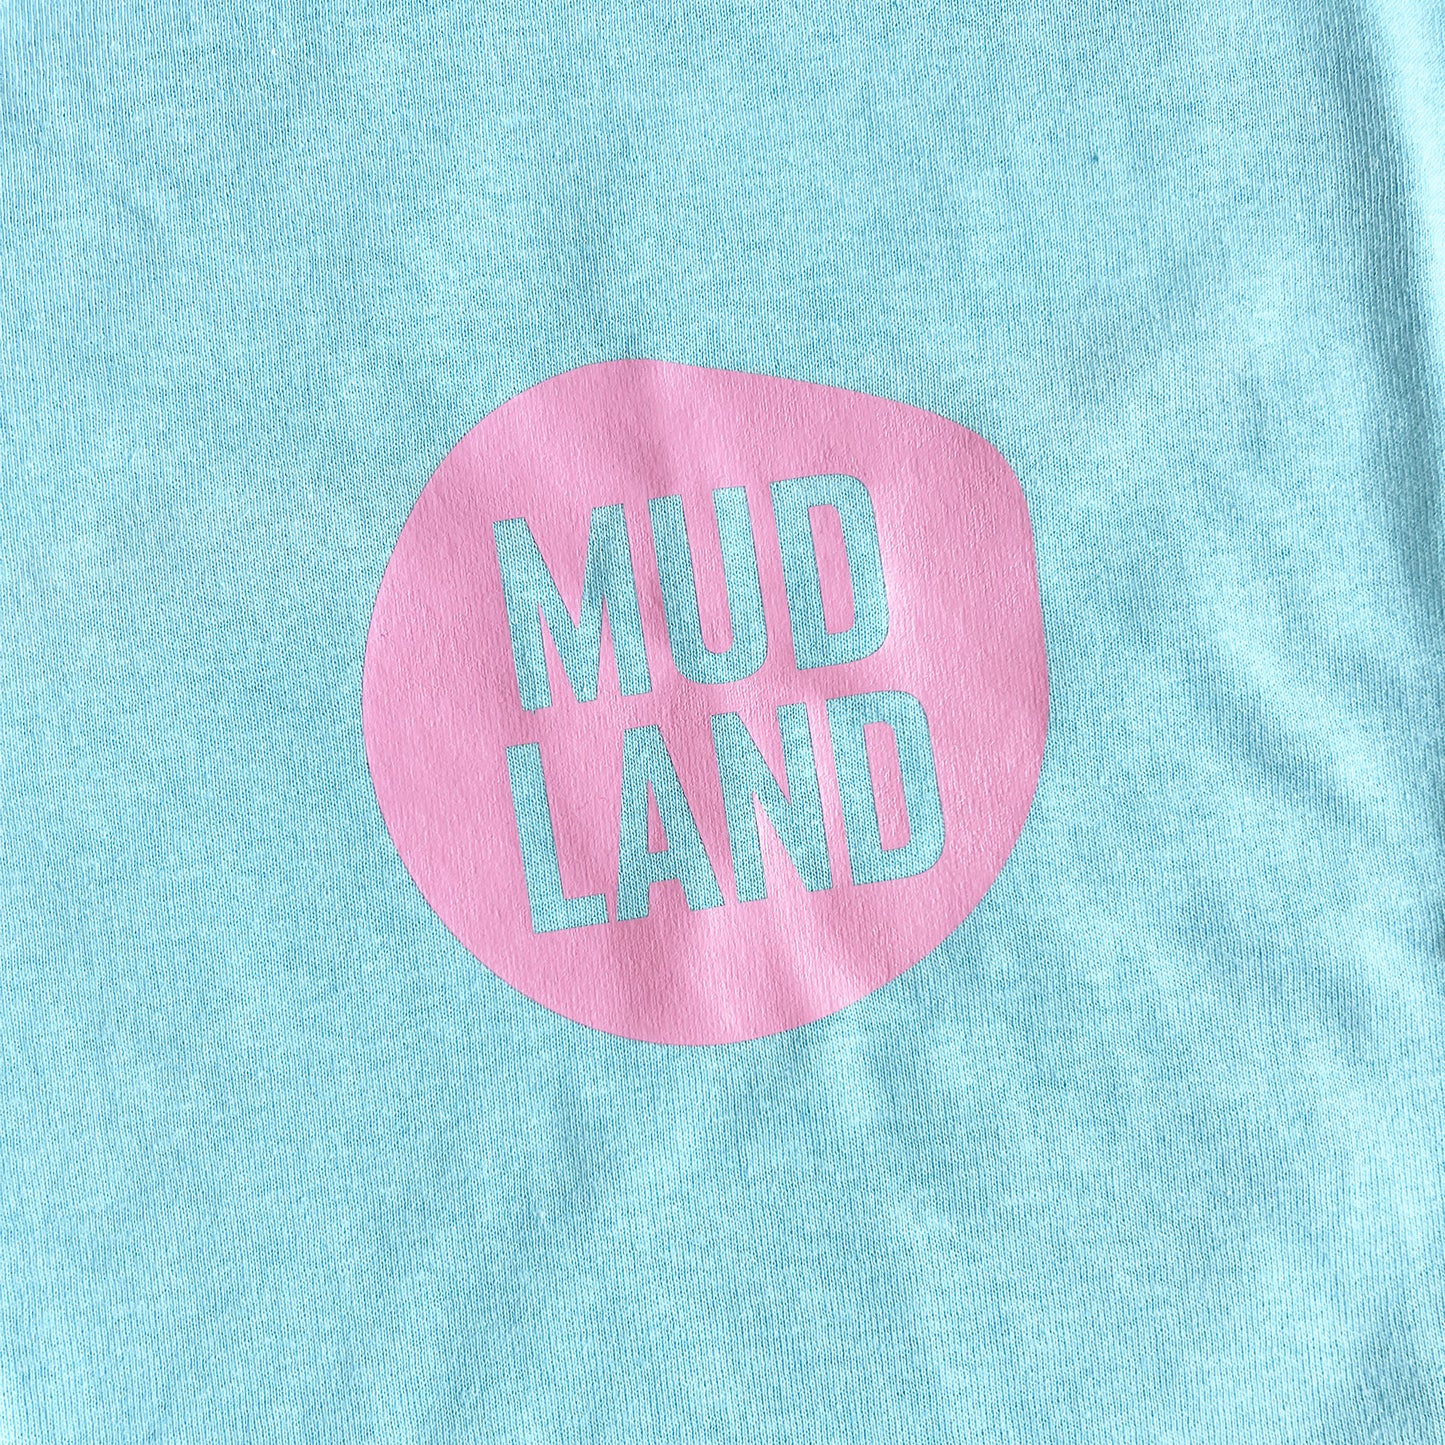 Mudland T-shirt - pink logo on light blue tee